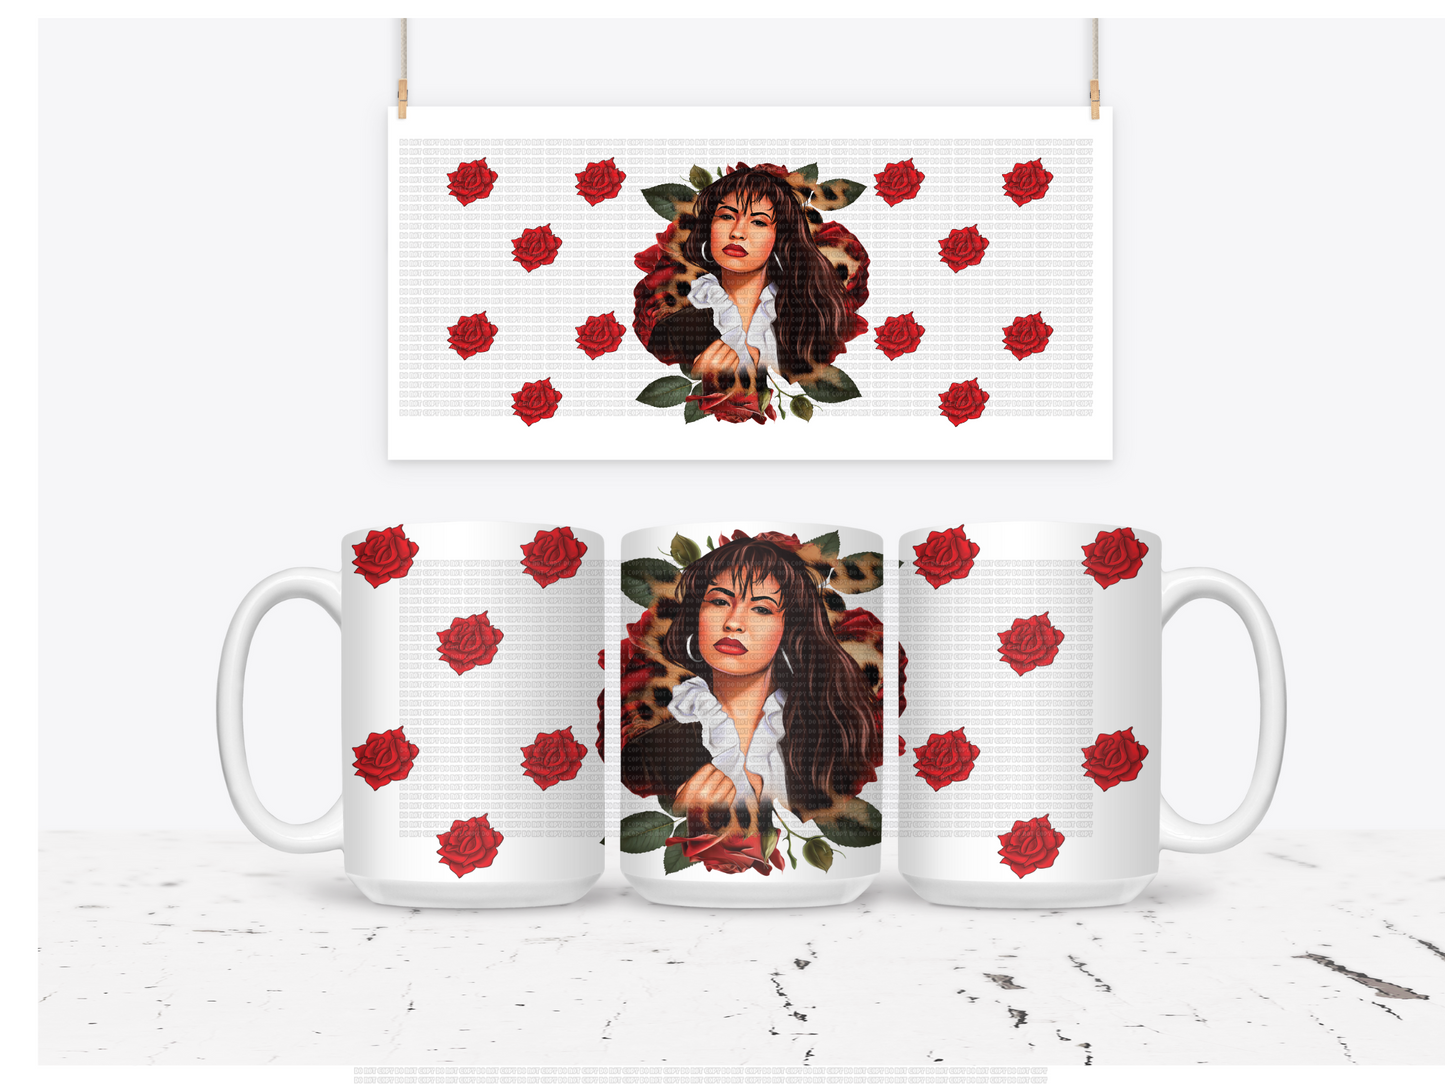 Tejano Queen red roses  Mug wrap